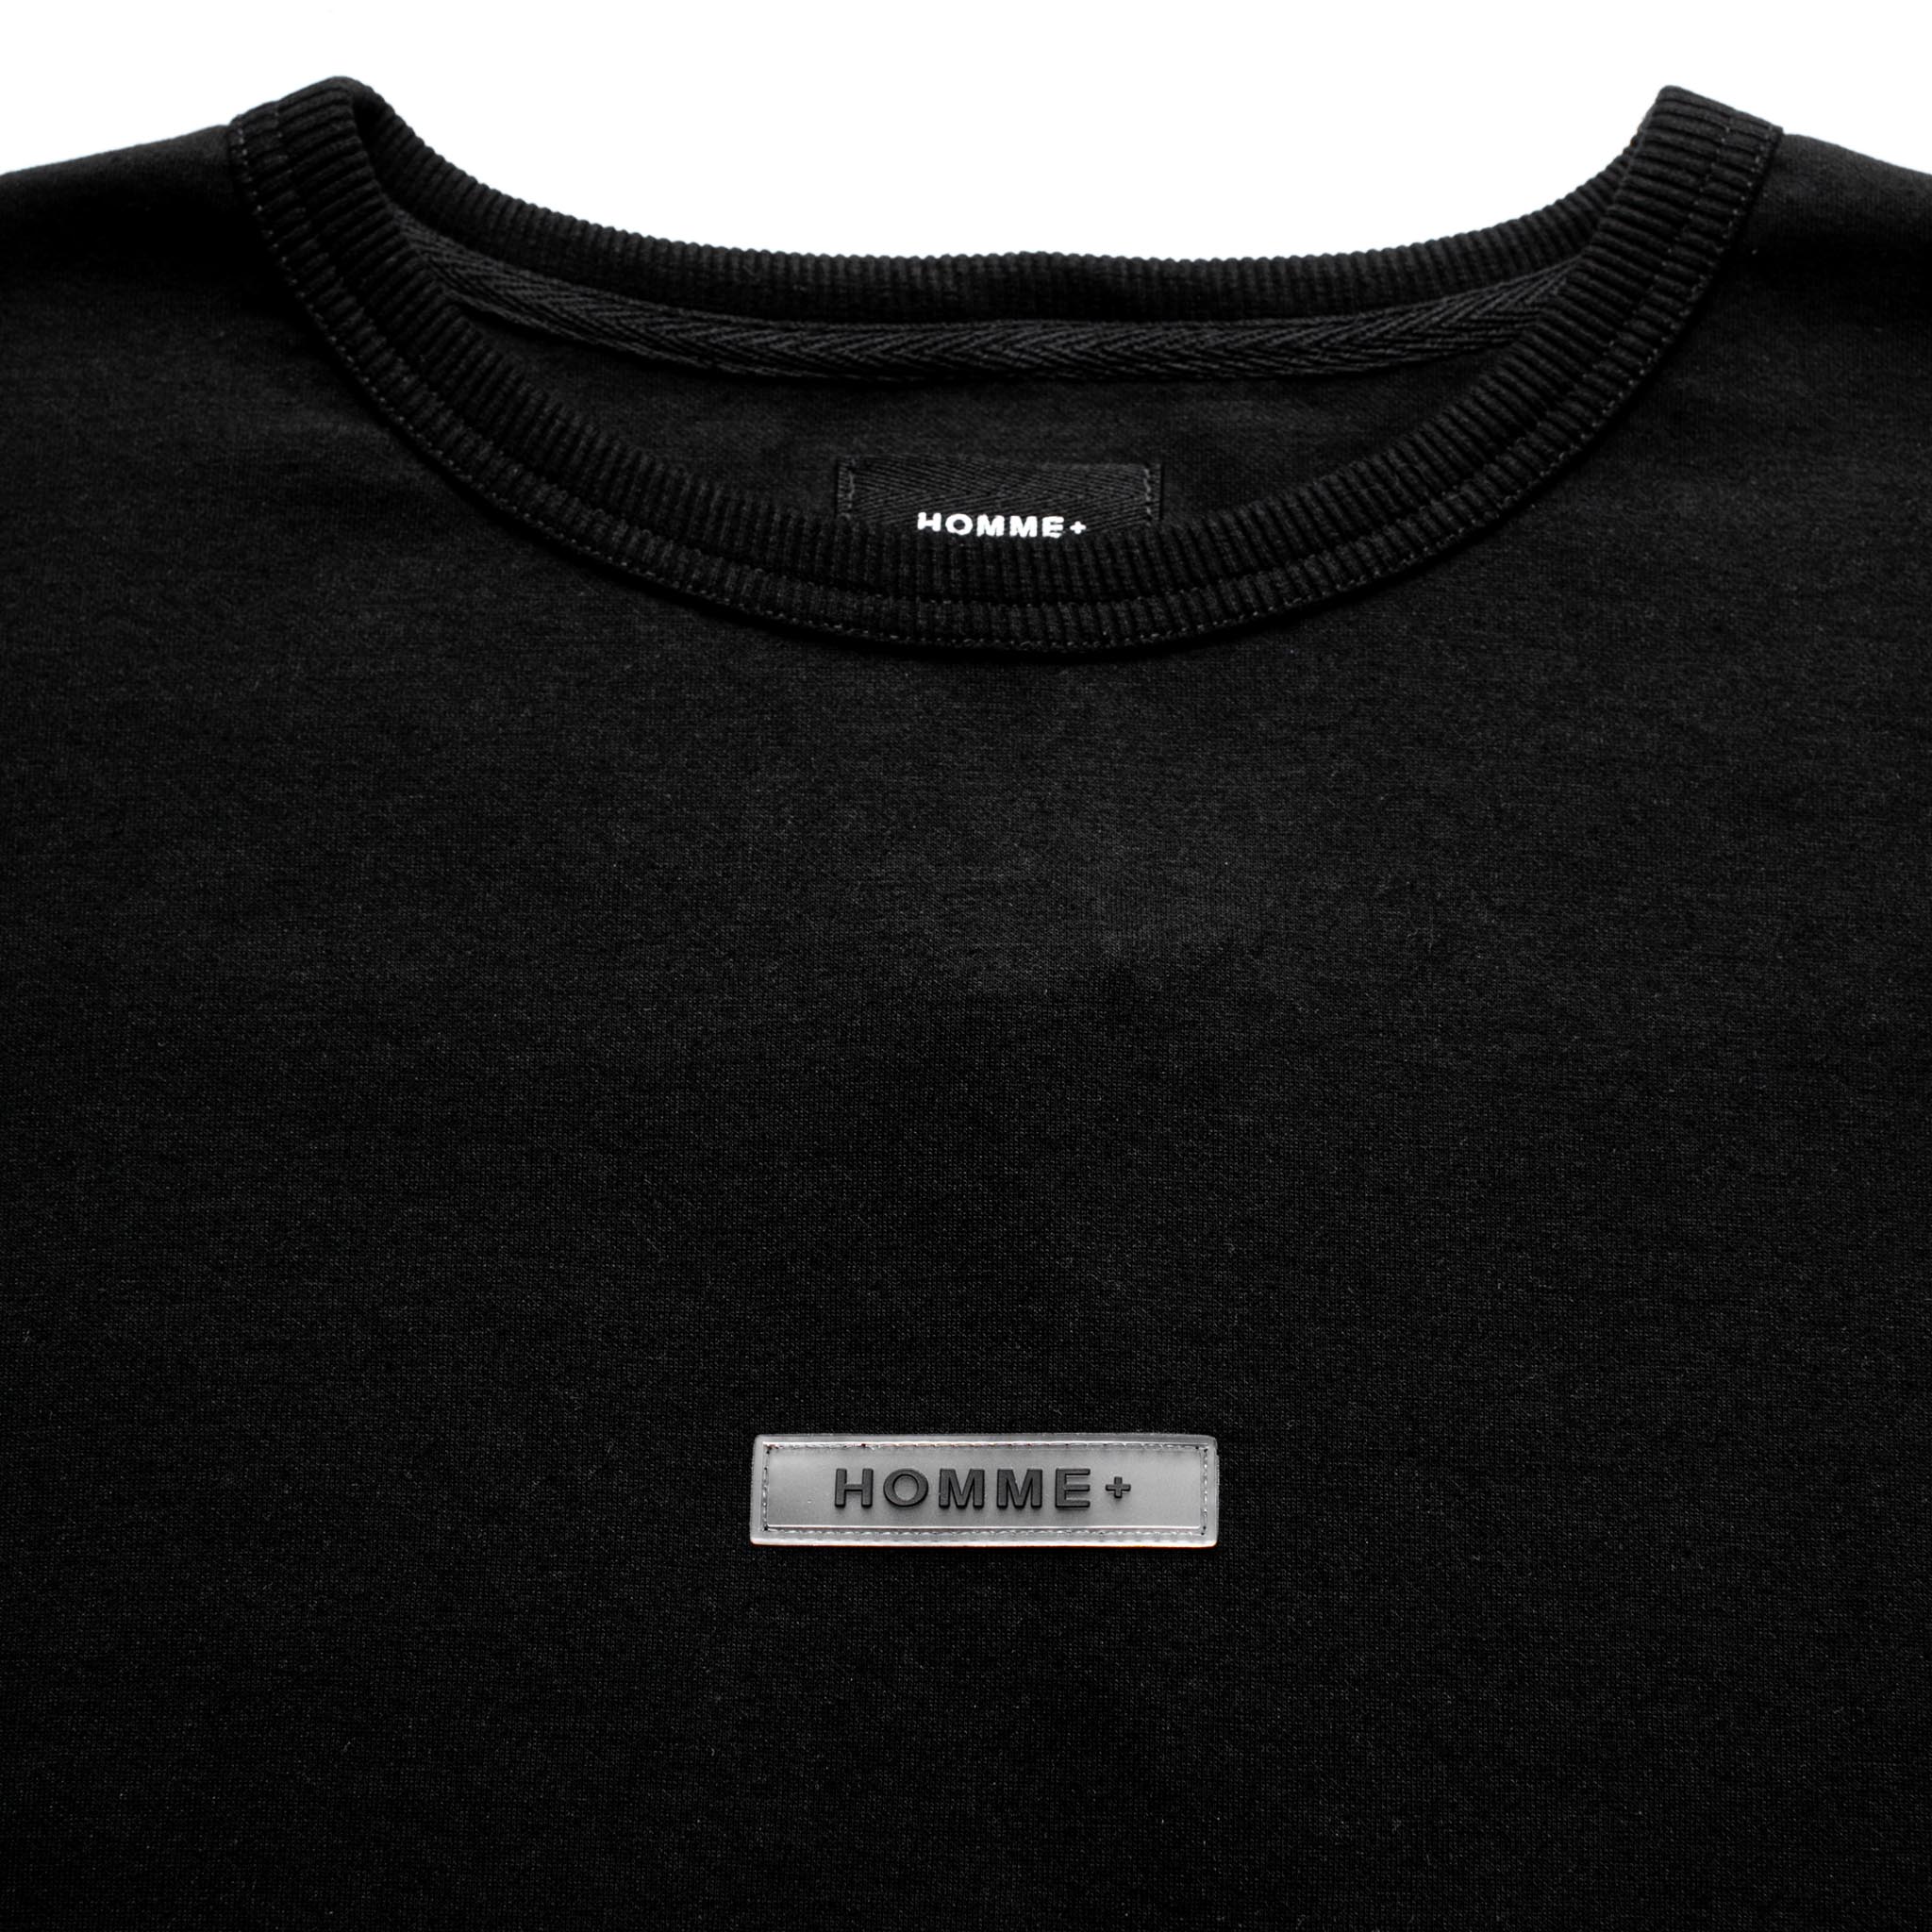 HOMME+ 'ESSENTIAL' Rubber Logo Big Tee Black/Black